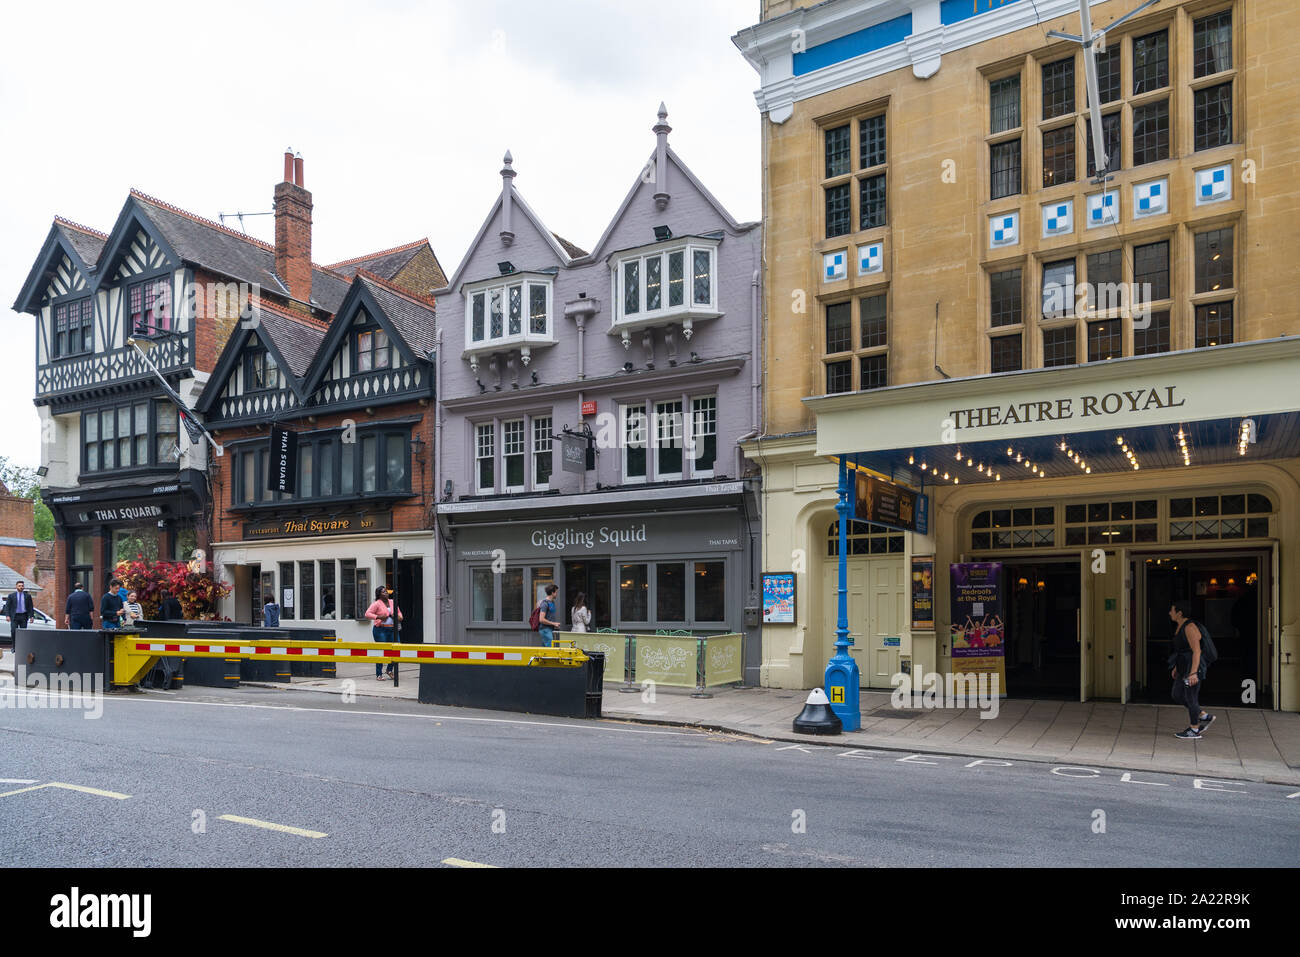 Theatre Royal in Thames Street, Windsor, Berkshire, England, UK Stock Photo